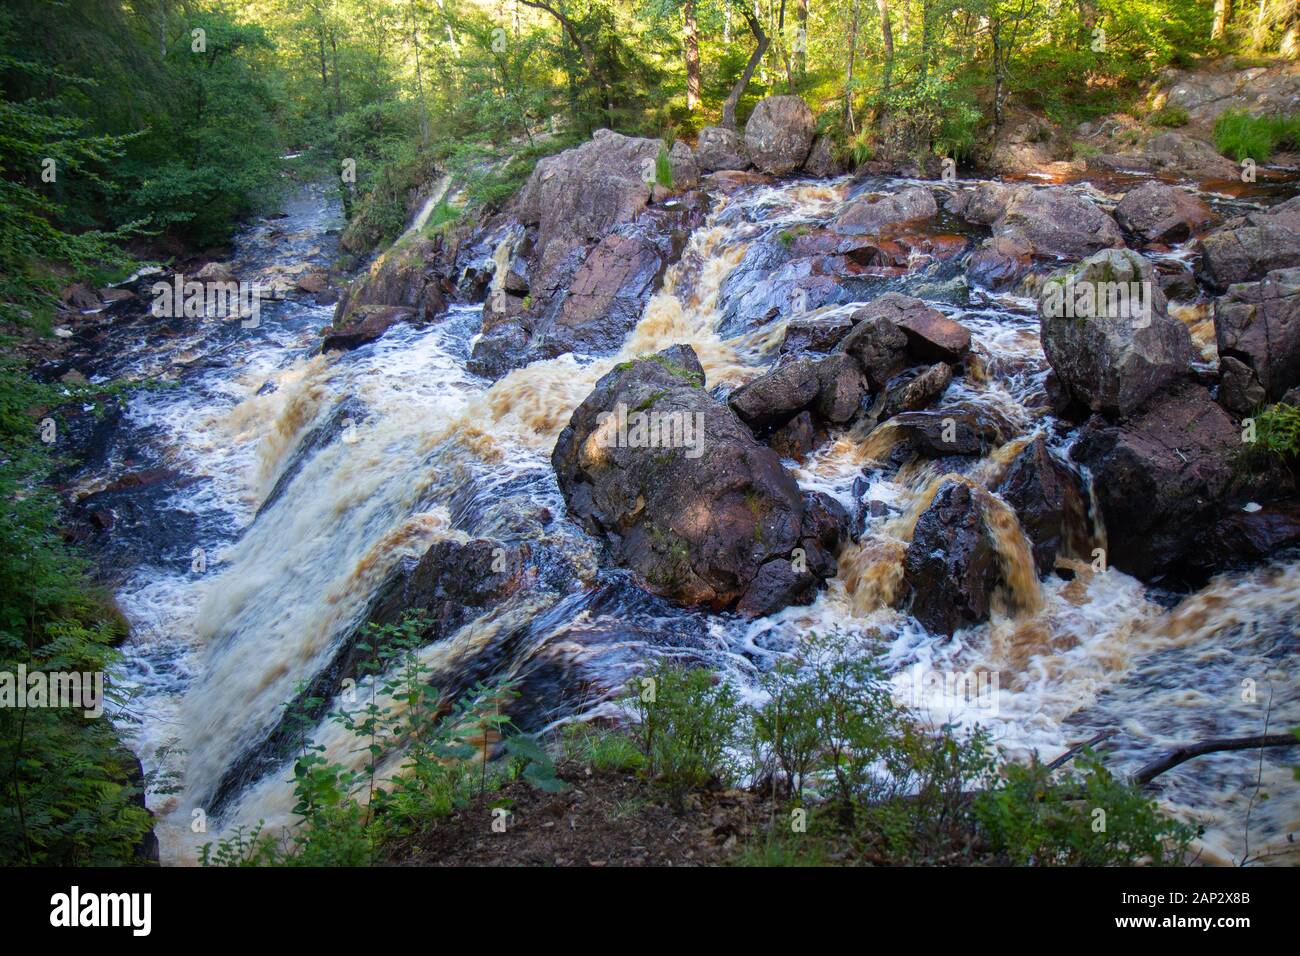 Danska fall - a waterfall near Halmstad, Sweden Stock Photo